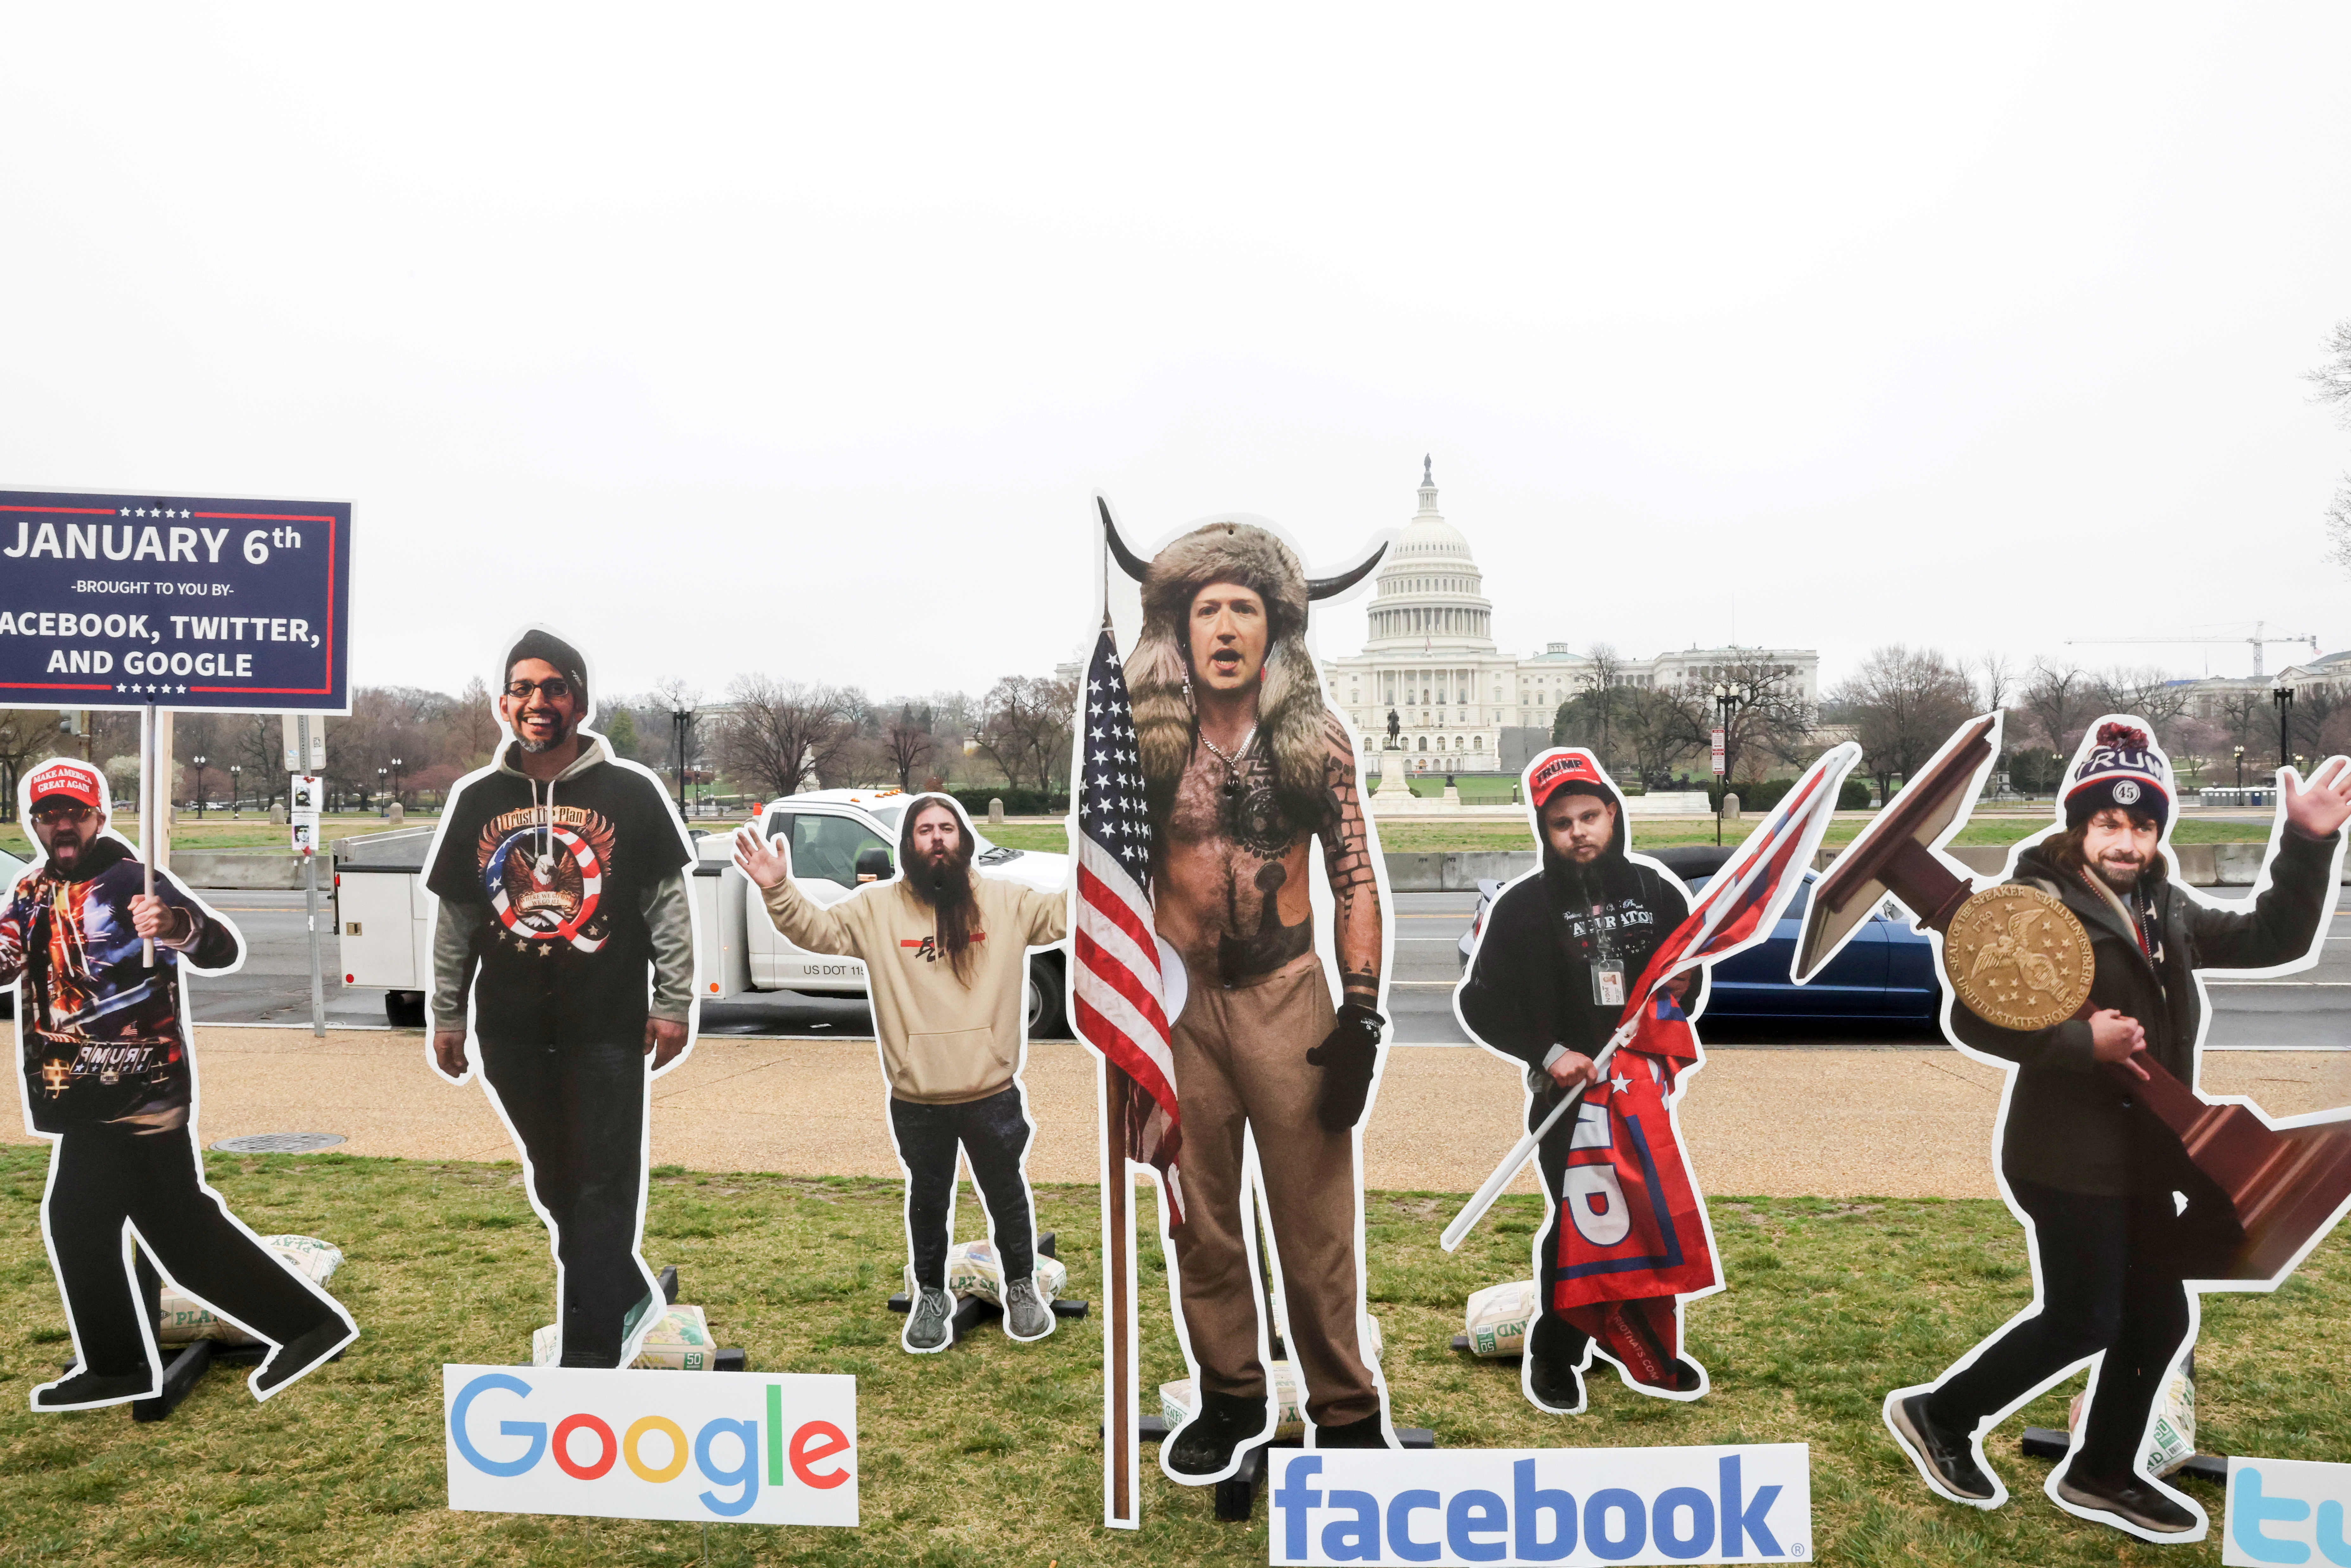 SumOfUs art installation protest near the U.S. Capitol in Washington